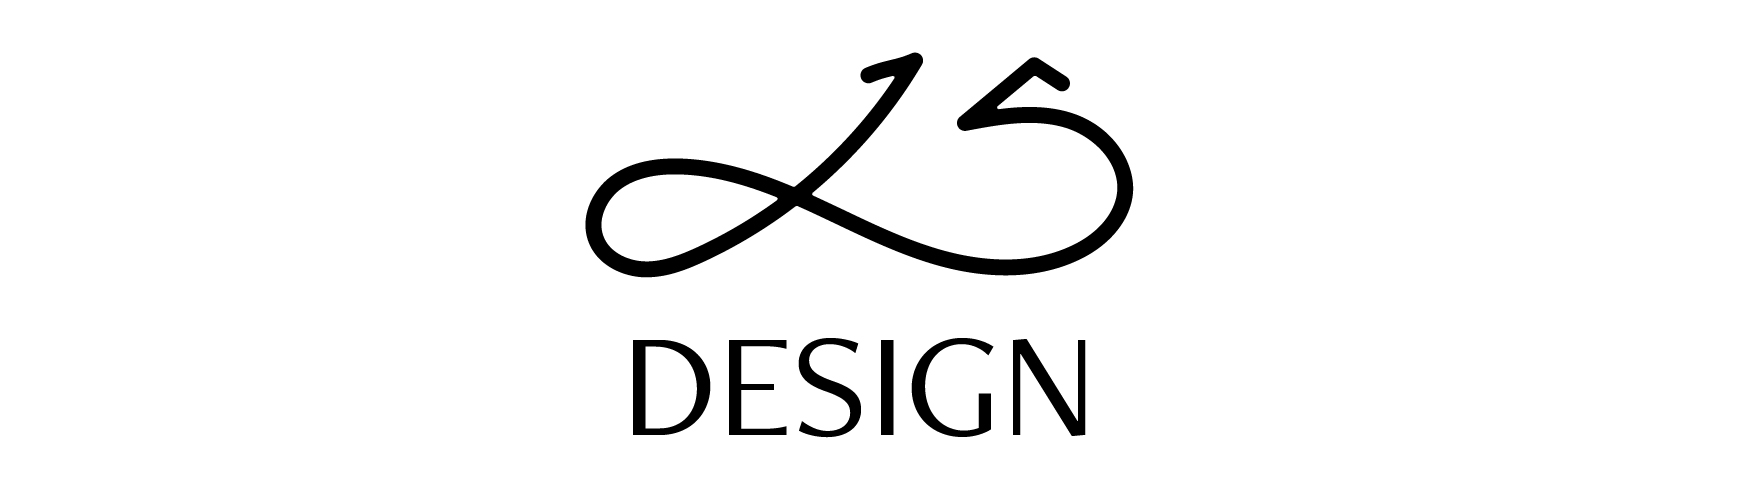 JS Designs Logo_02